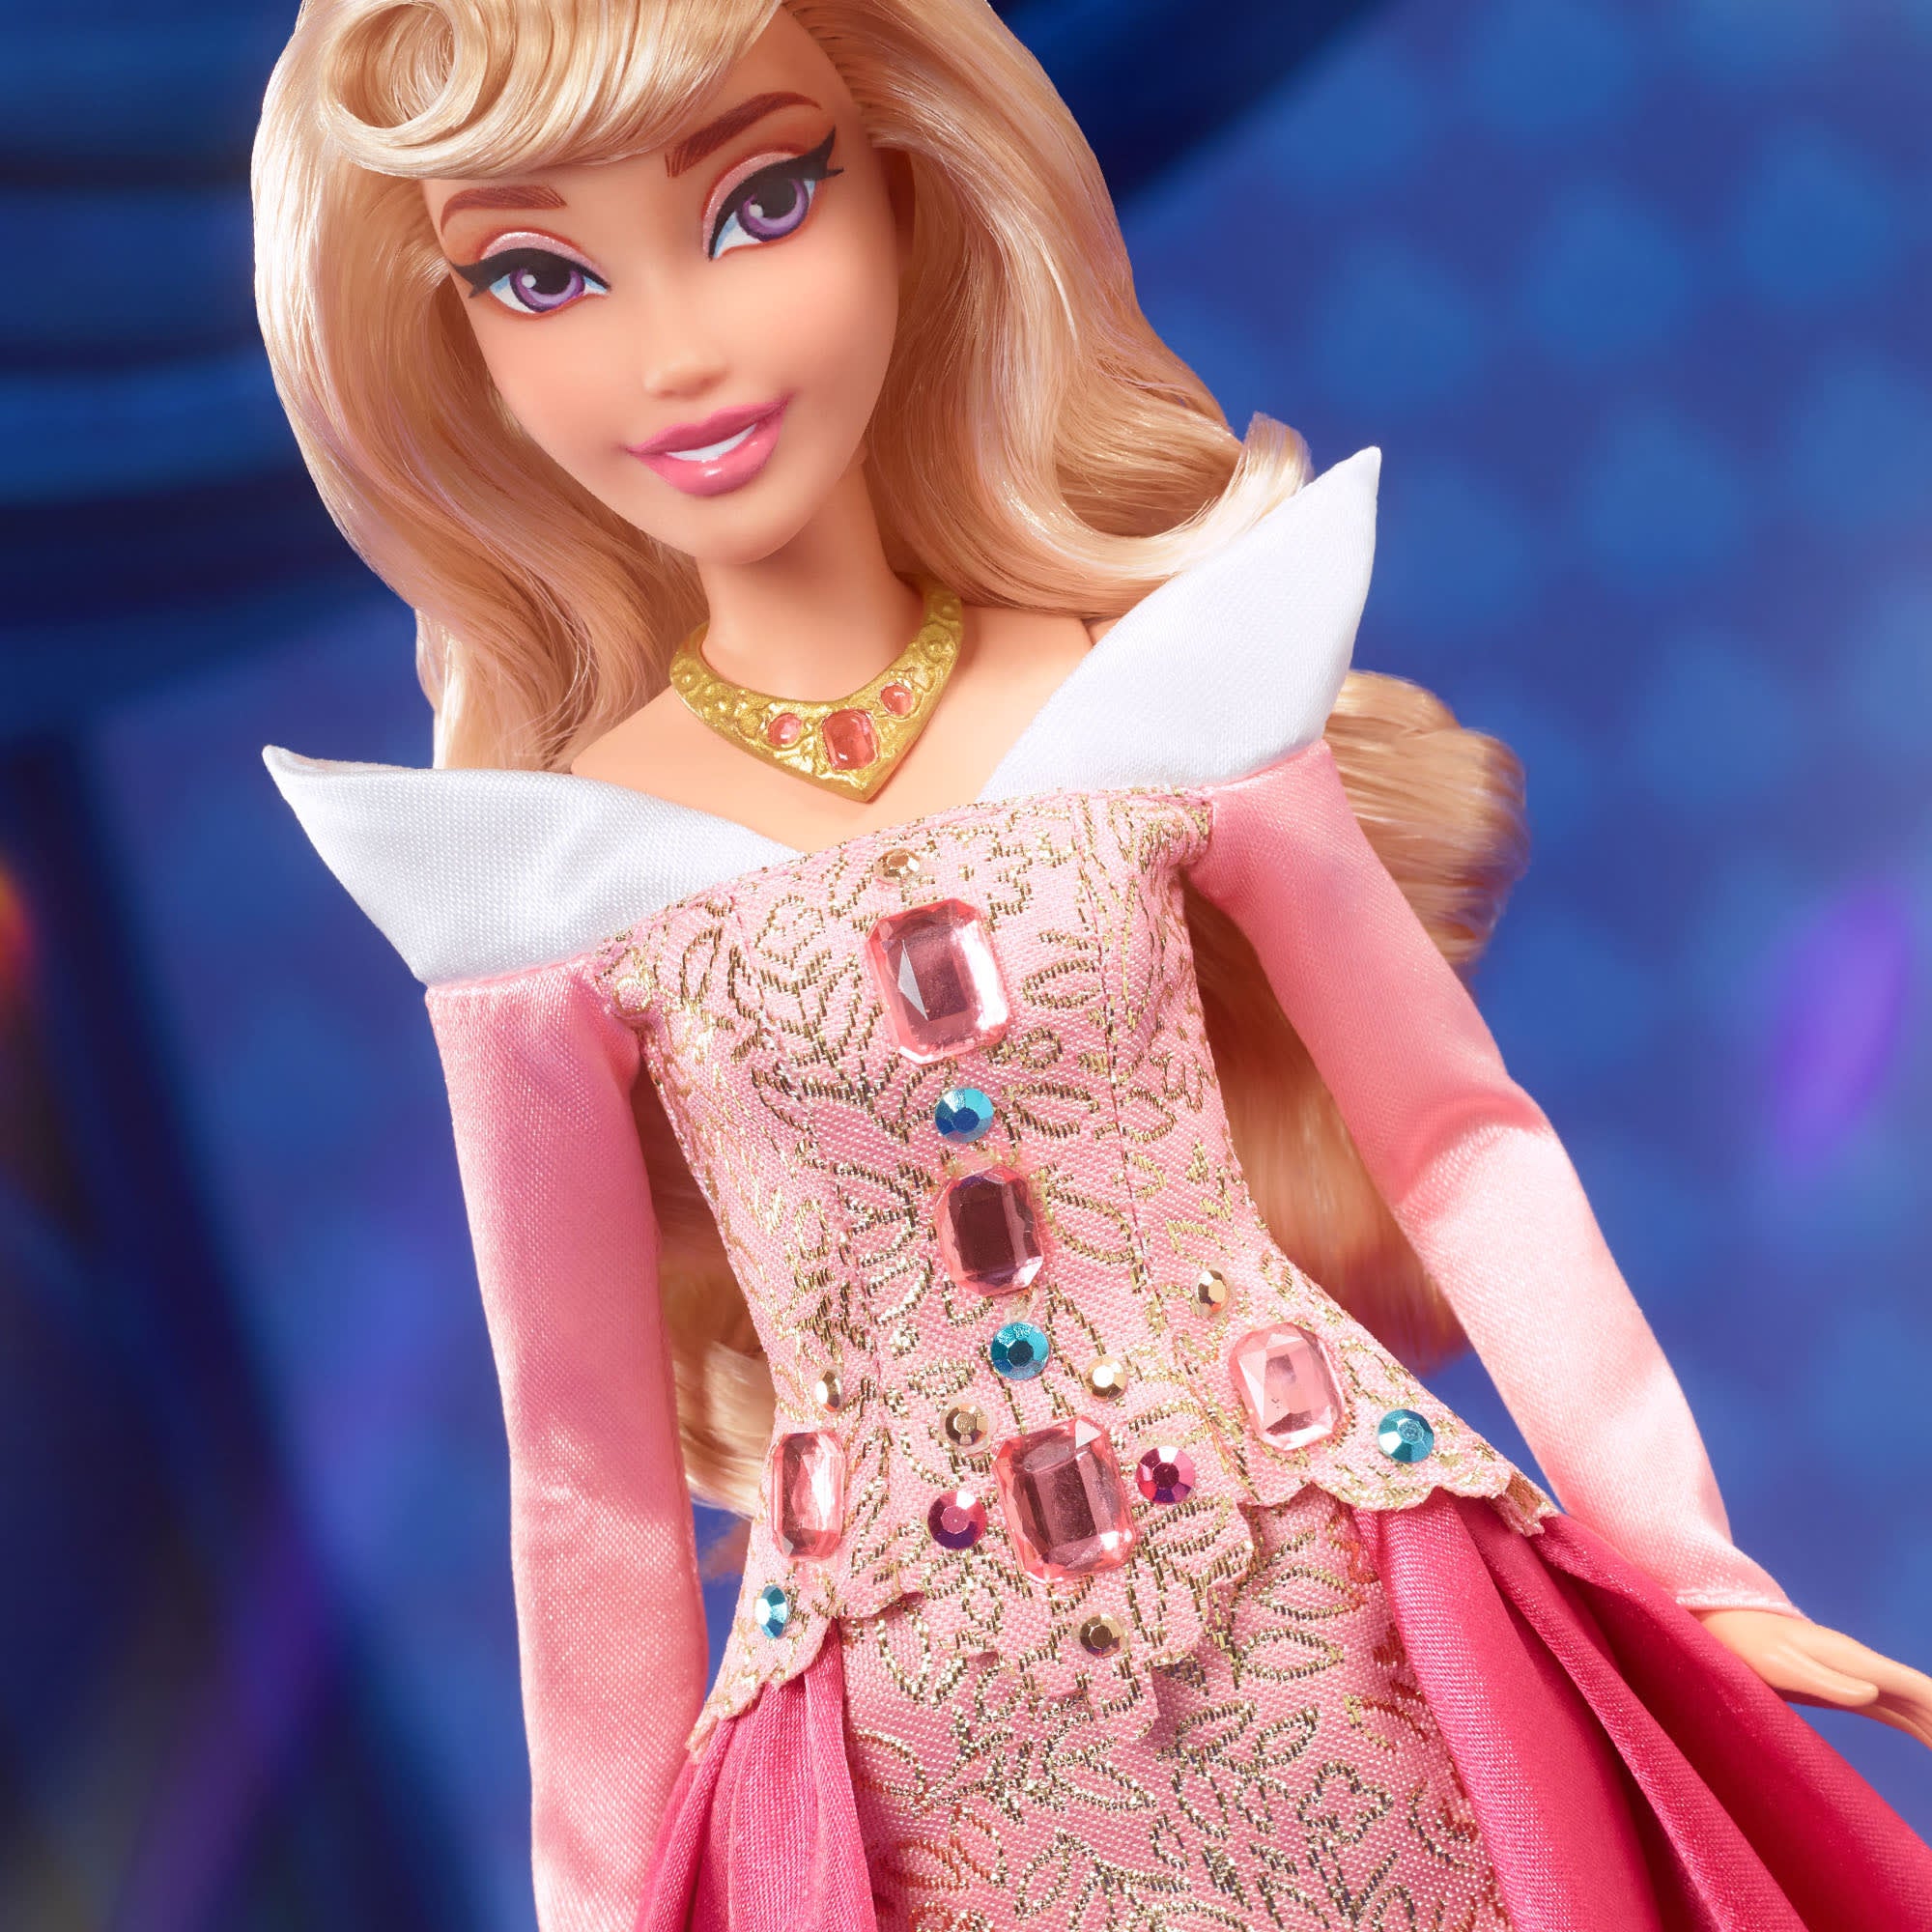  Mattel Disney Princess Aurora Fashion Doll, Sparkling Look with  Blonde Hair, Purple Eyes & Tiara Accessory : Toys & Games